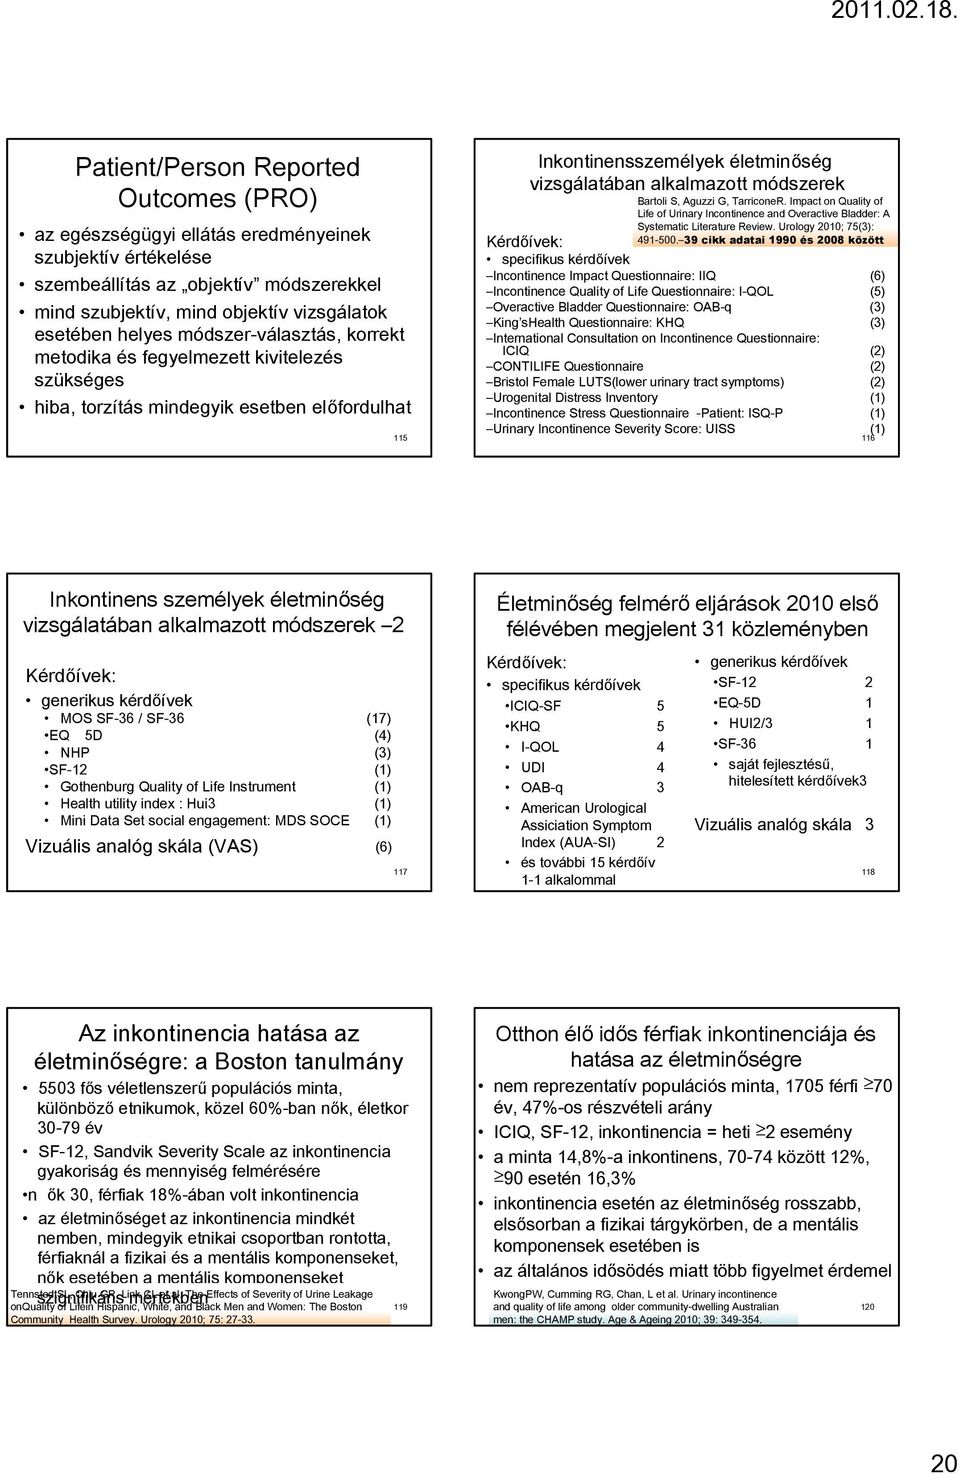 Kérdőívek: specifikus kérdőívek Bartoli S, Aguzzi G, TarriconeR. Impact on Quality of Life of Urinary Incontinence and Overactive Bladder: A Systematic Literature Review. Urology 2010; 75(3): 491-500.